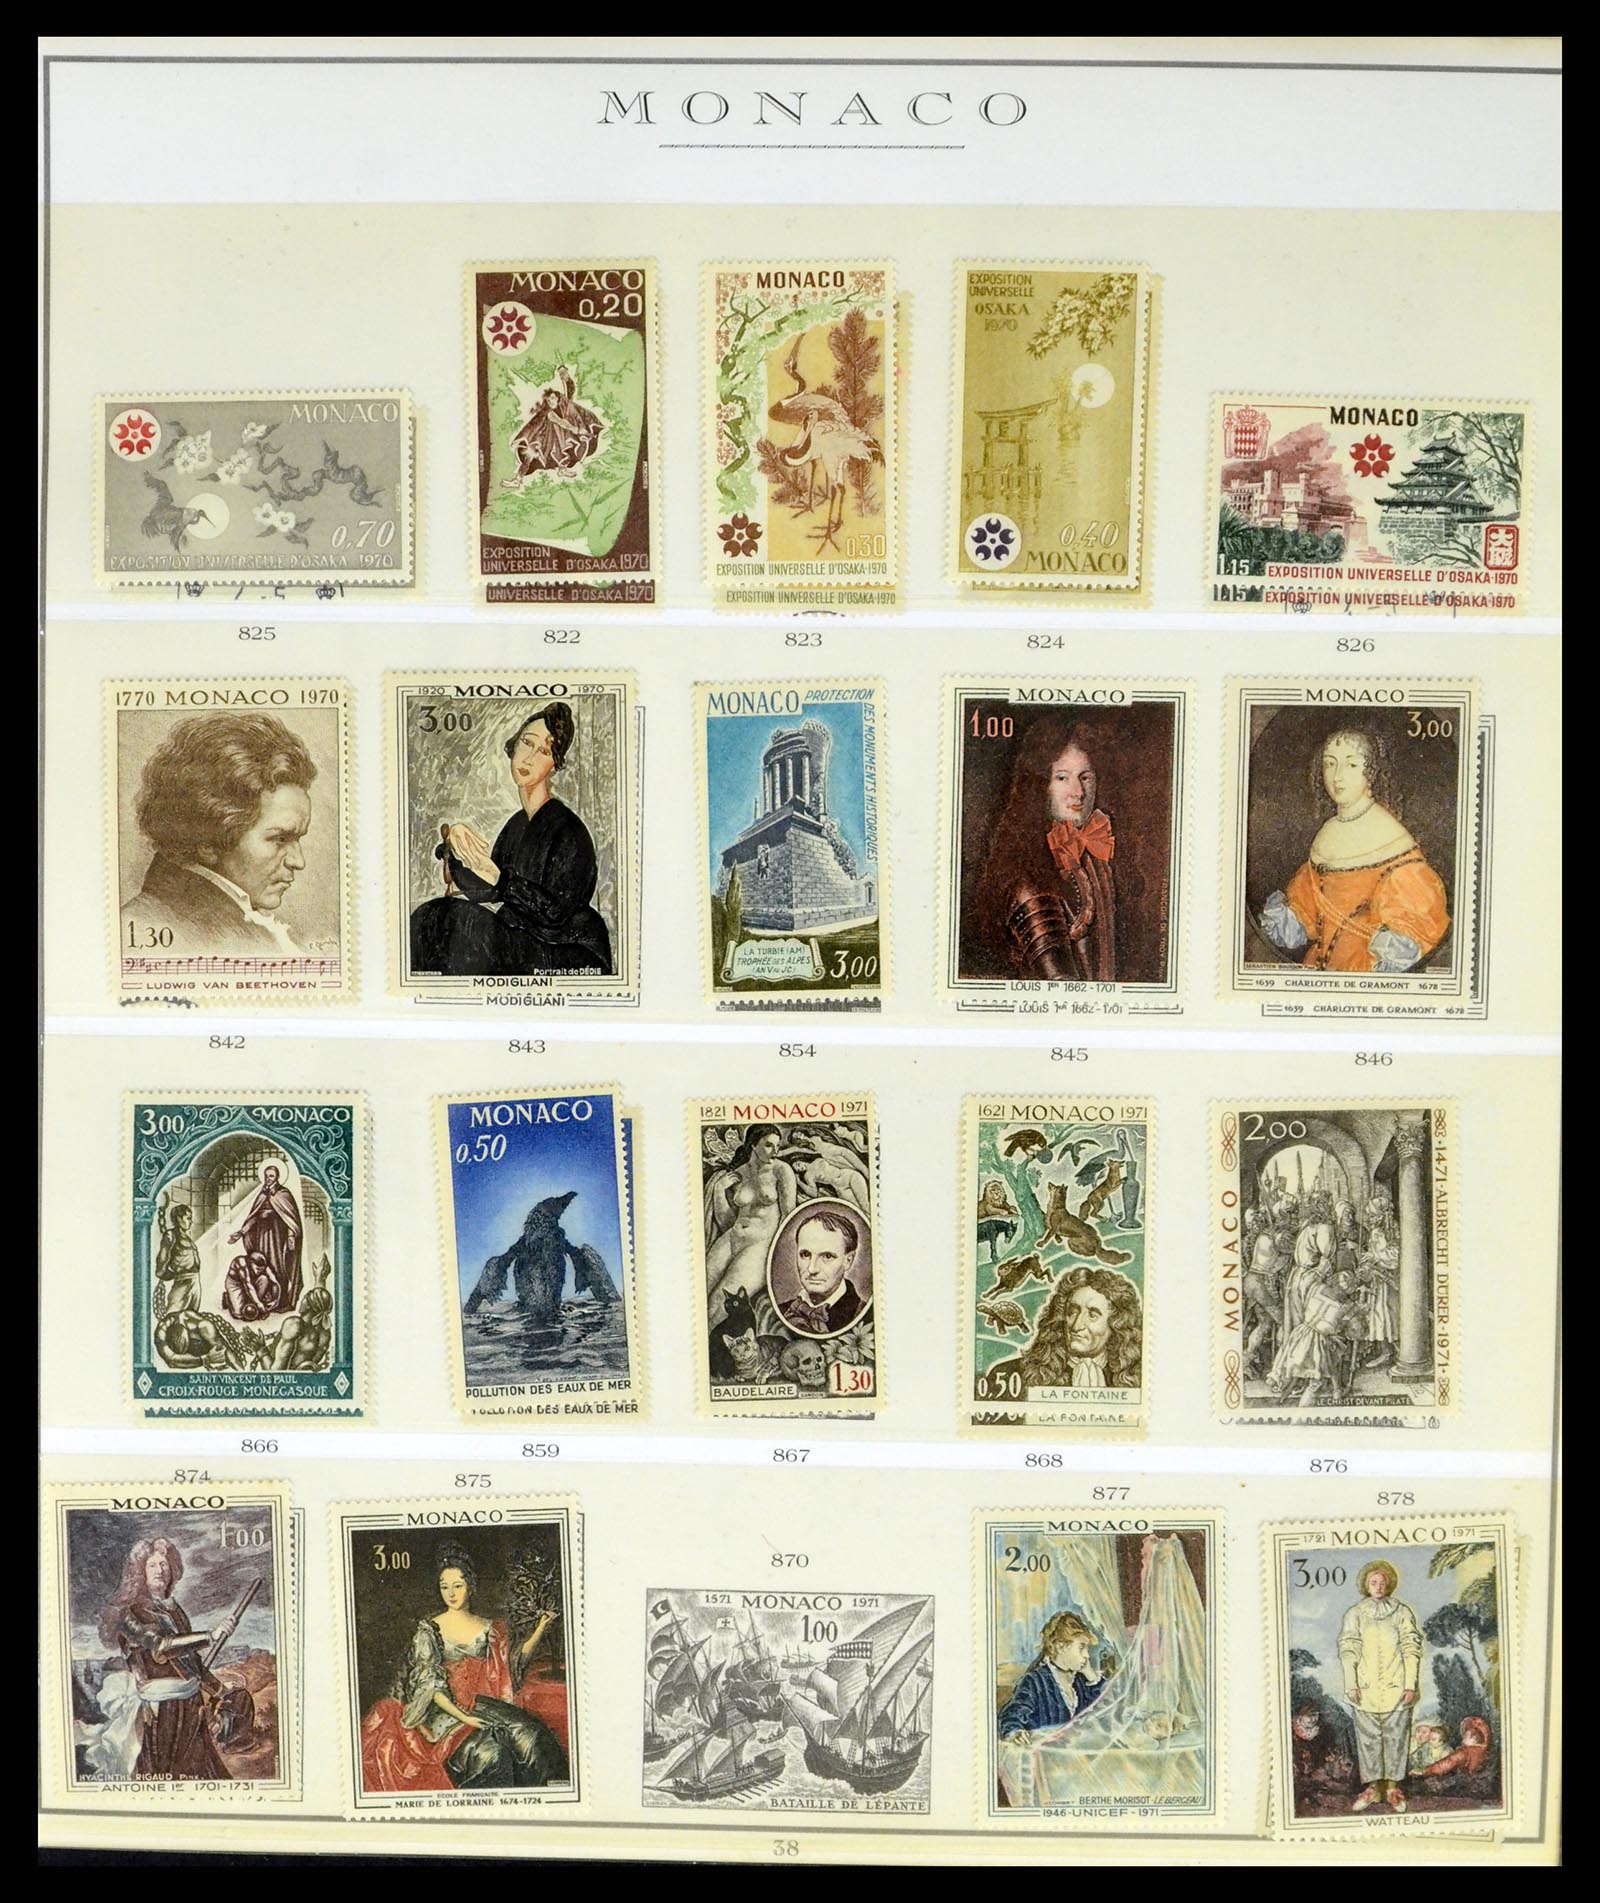 37437 073 - Stamp collection 37437 Monaco 1885-1996.